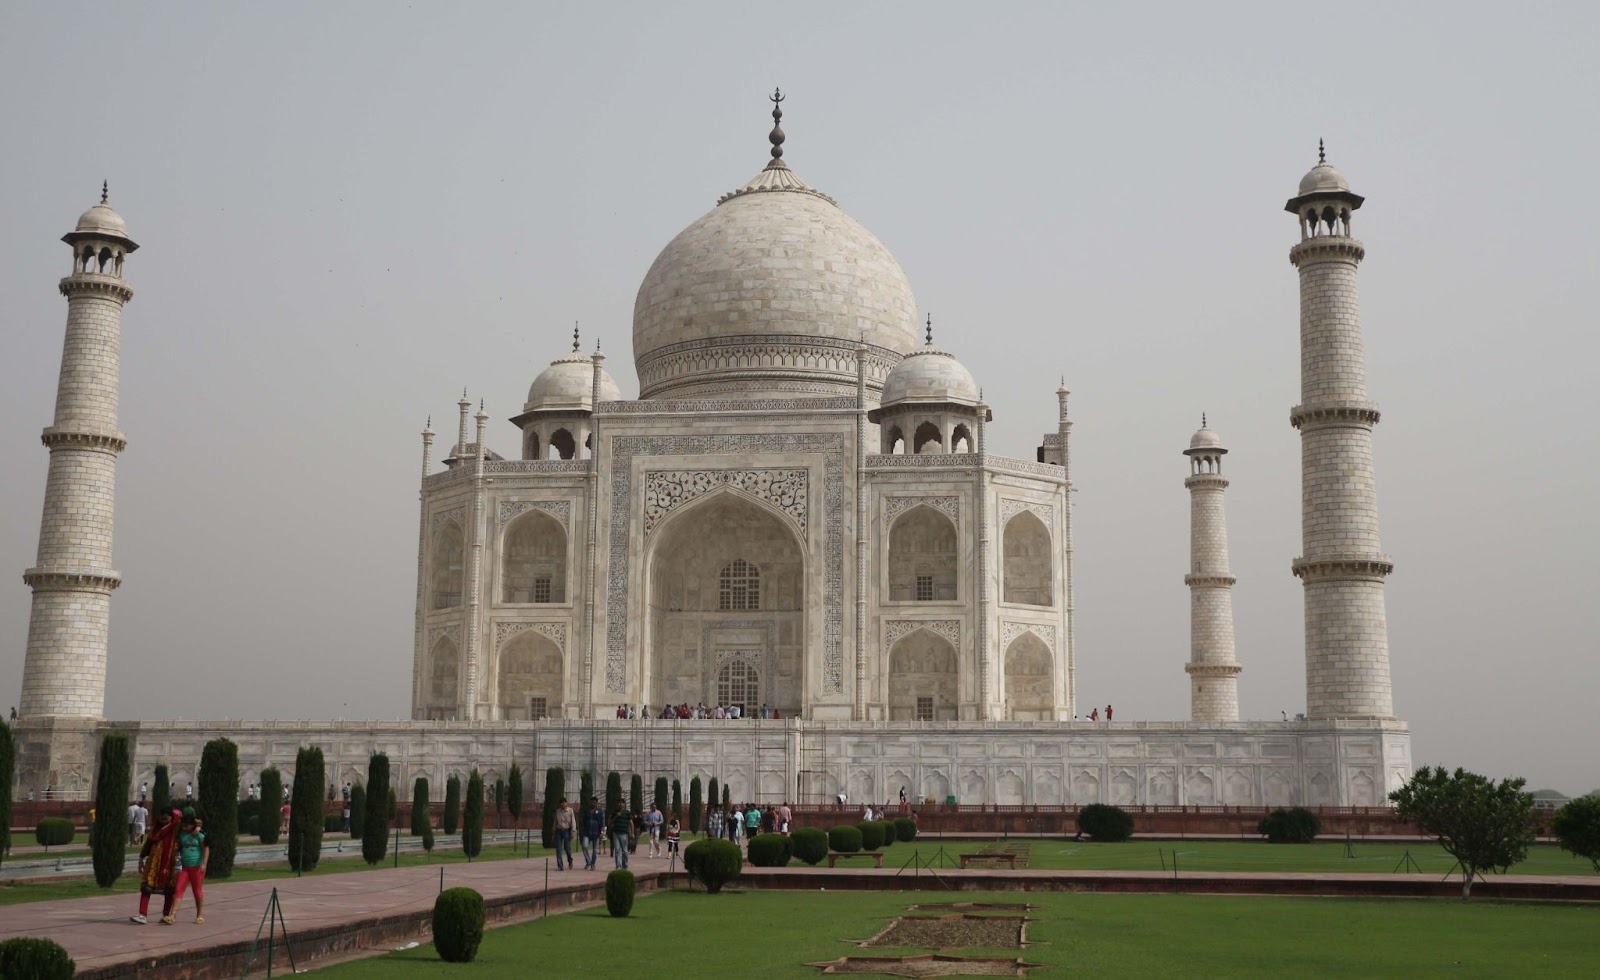 1 day in Agra, the Taj Mahal, another view of the Taj Mahal